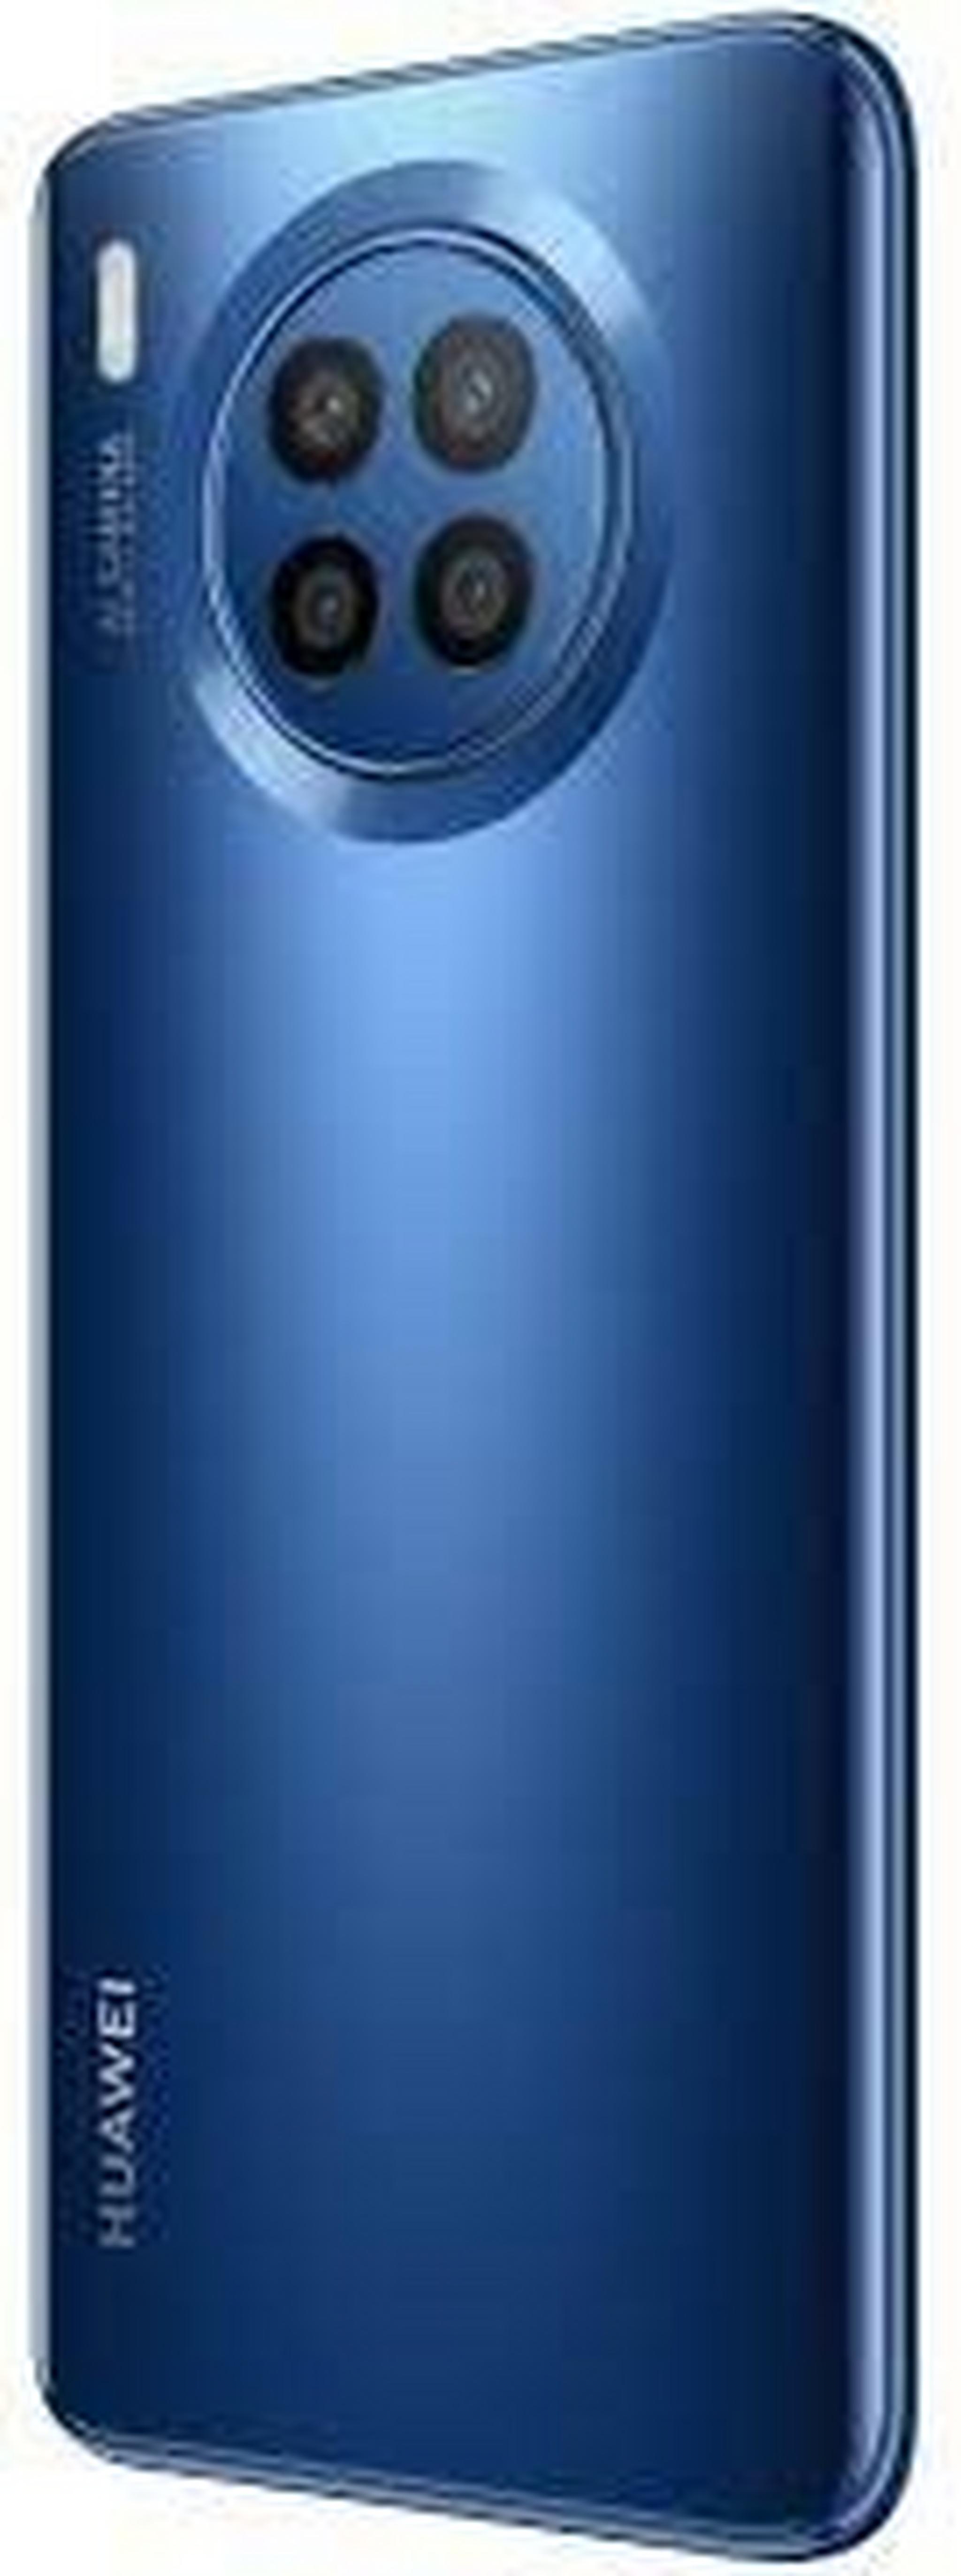 هاتف هواوي نوفا 8 اي بسعة 128 جيجابايت - أزرق